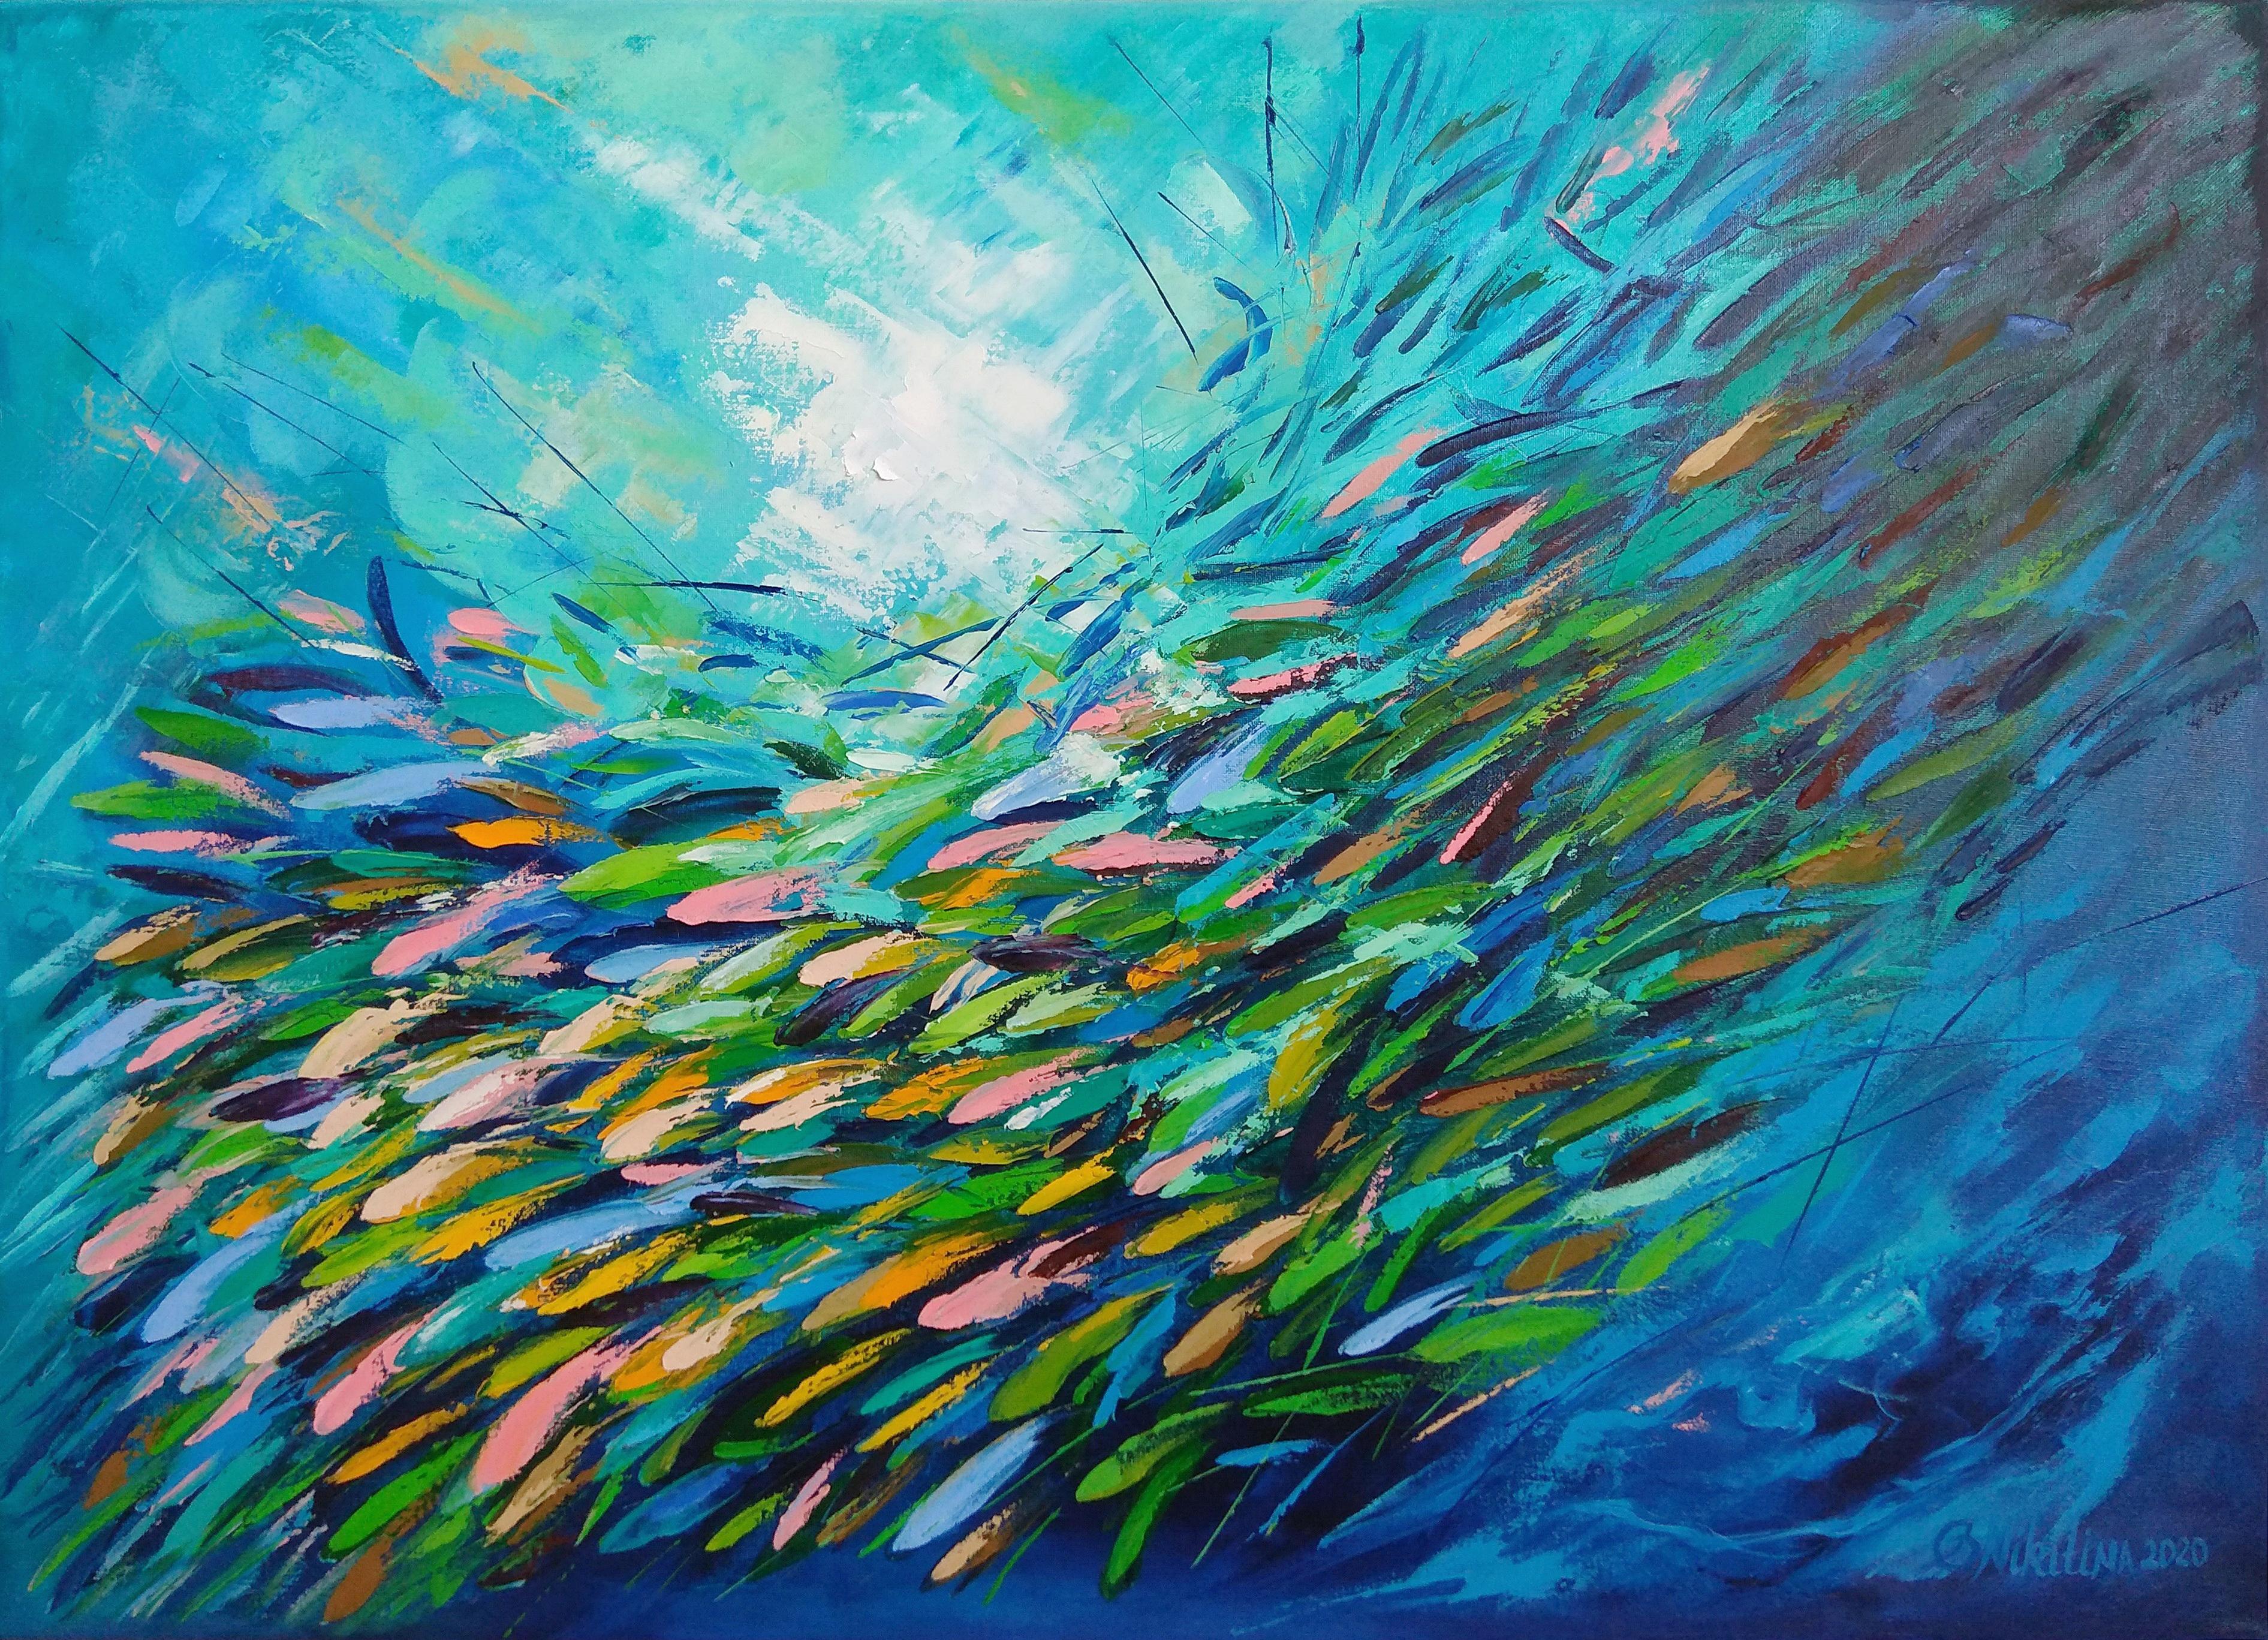 Olga Nikitina Interior Painting - School of Fish Painting Ocean Art